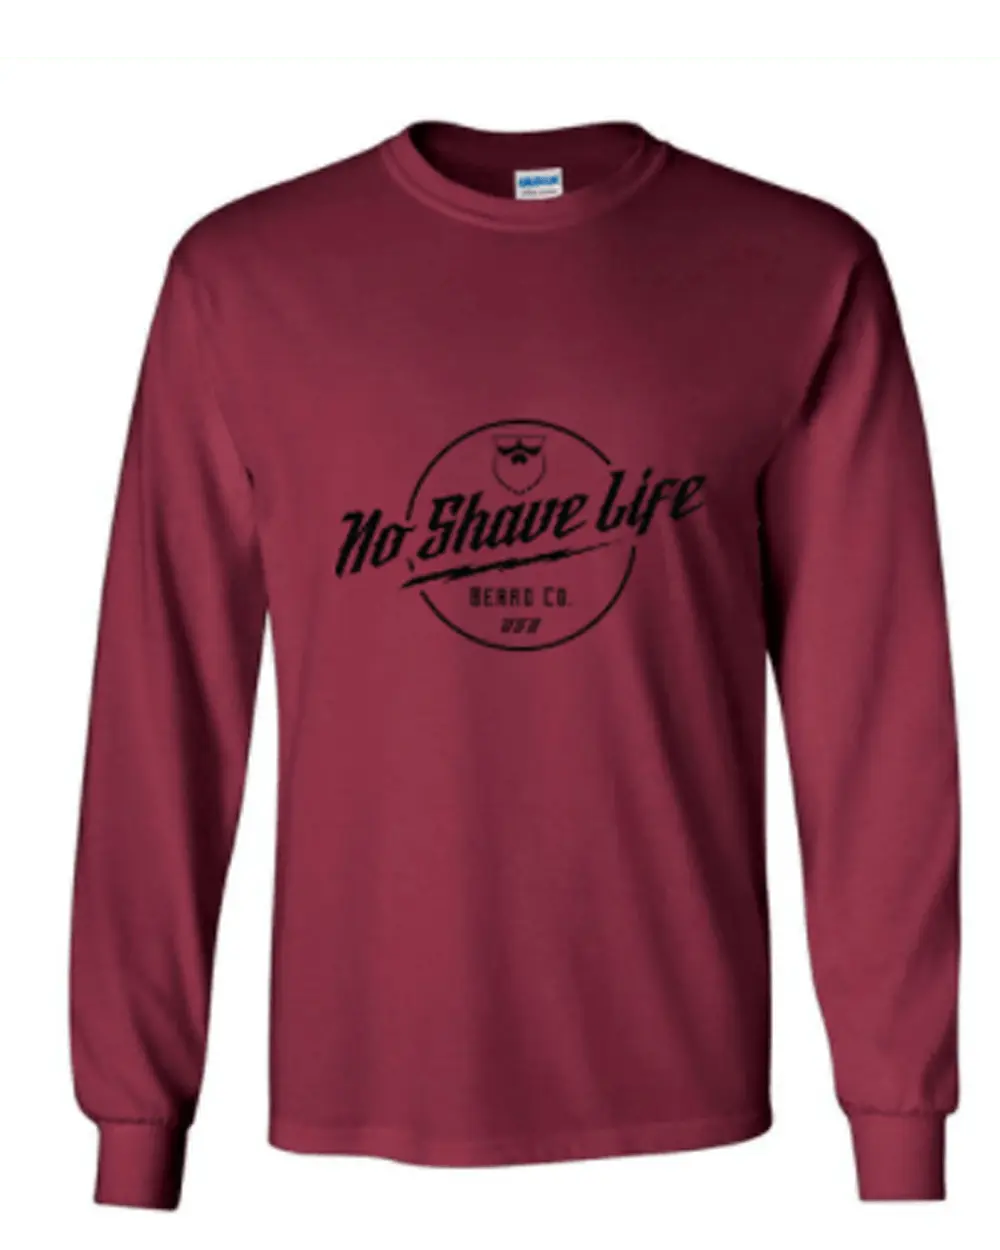 No Shave Life Crate Red Long Sleeve Shirt|Long Sleeve Shirt